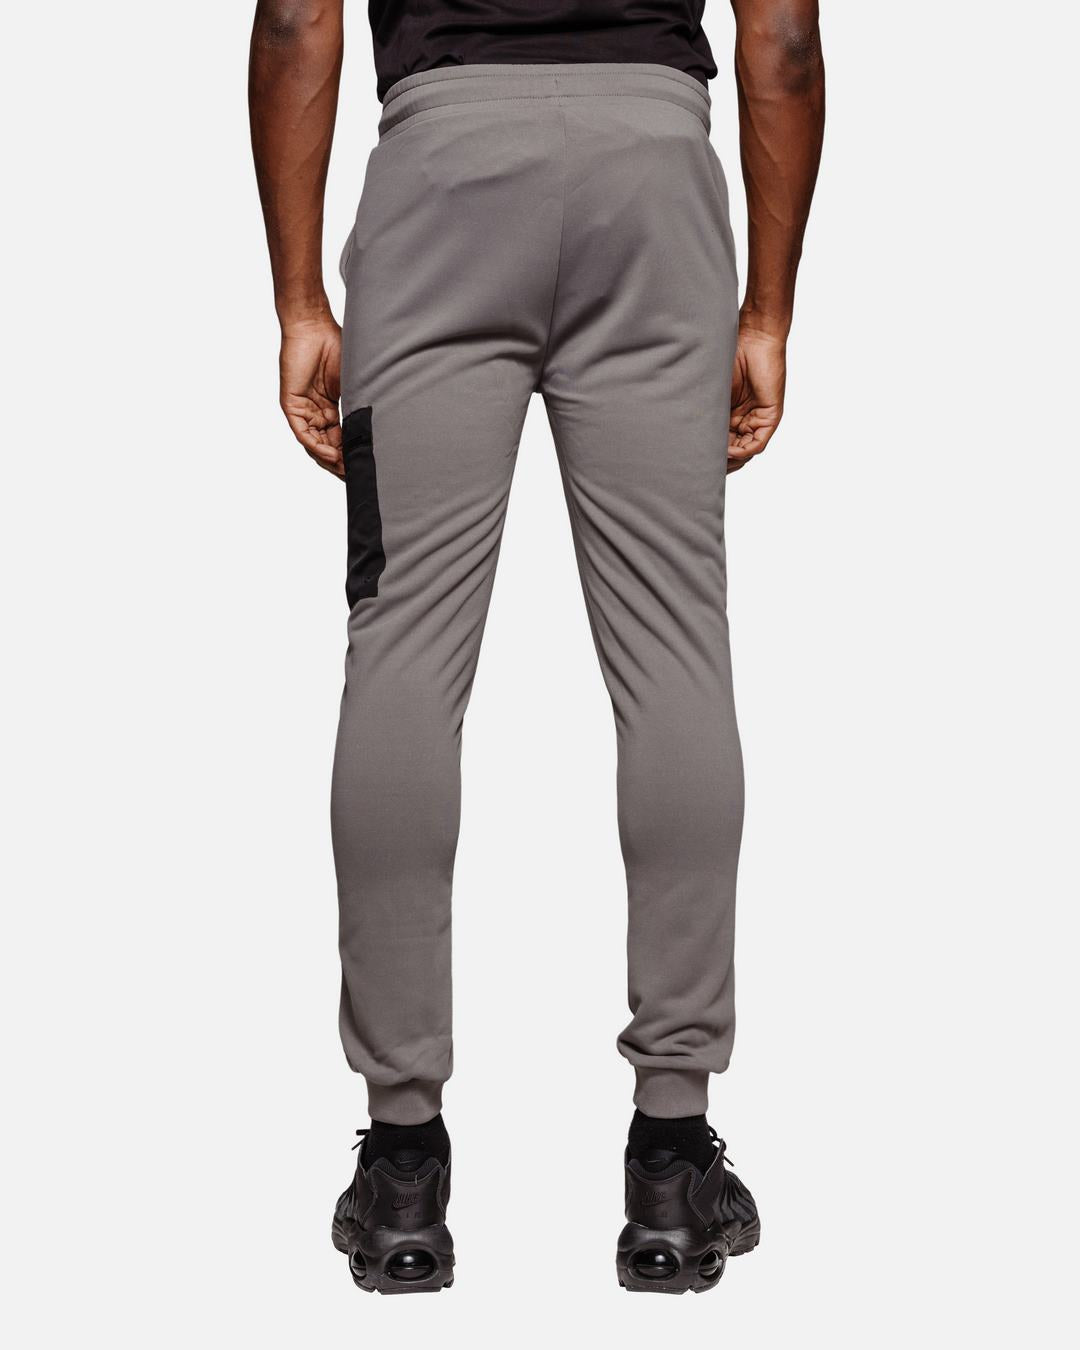 Ellesse Carbolet Pants - Grey/Black